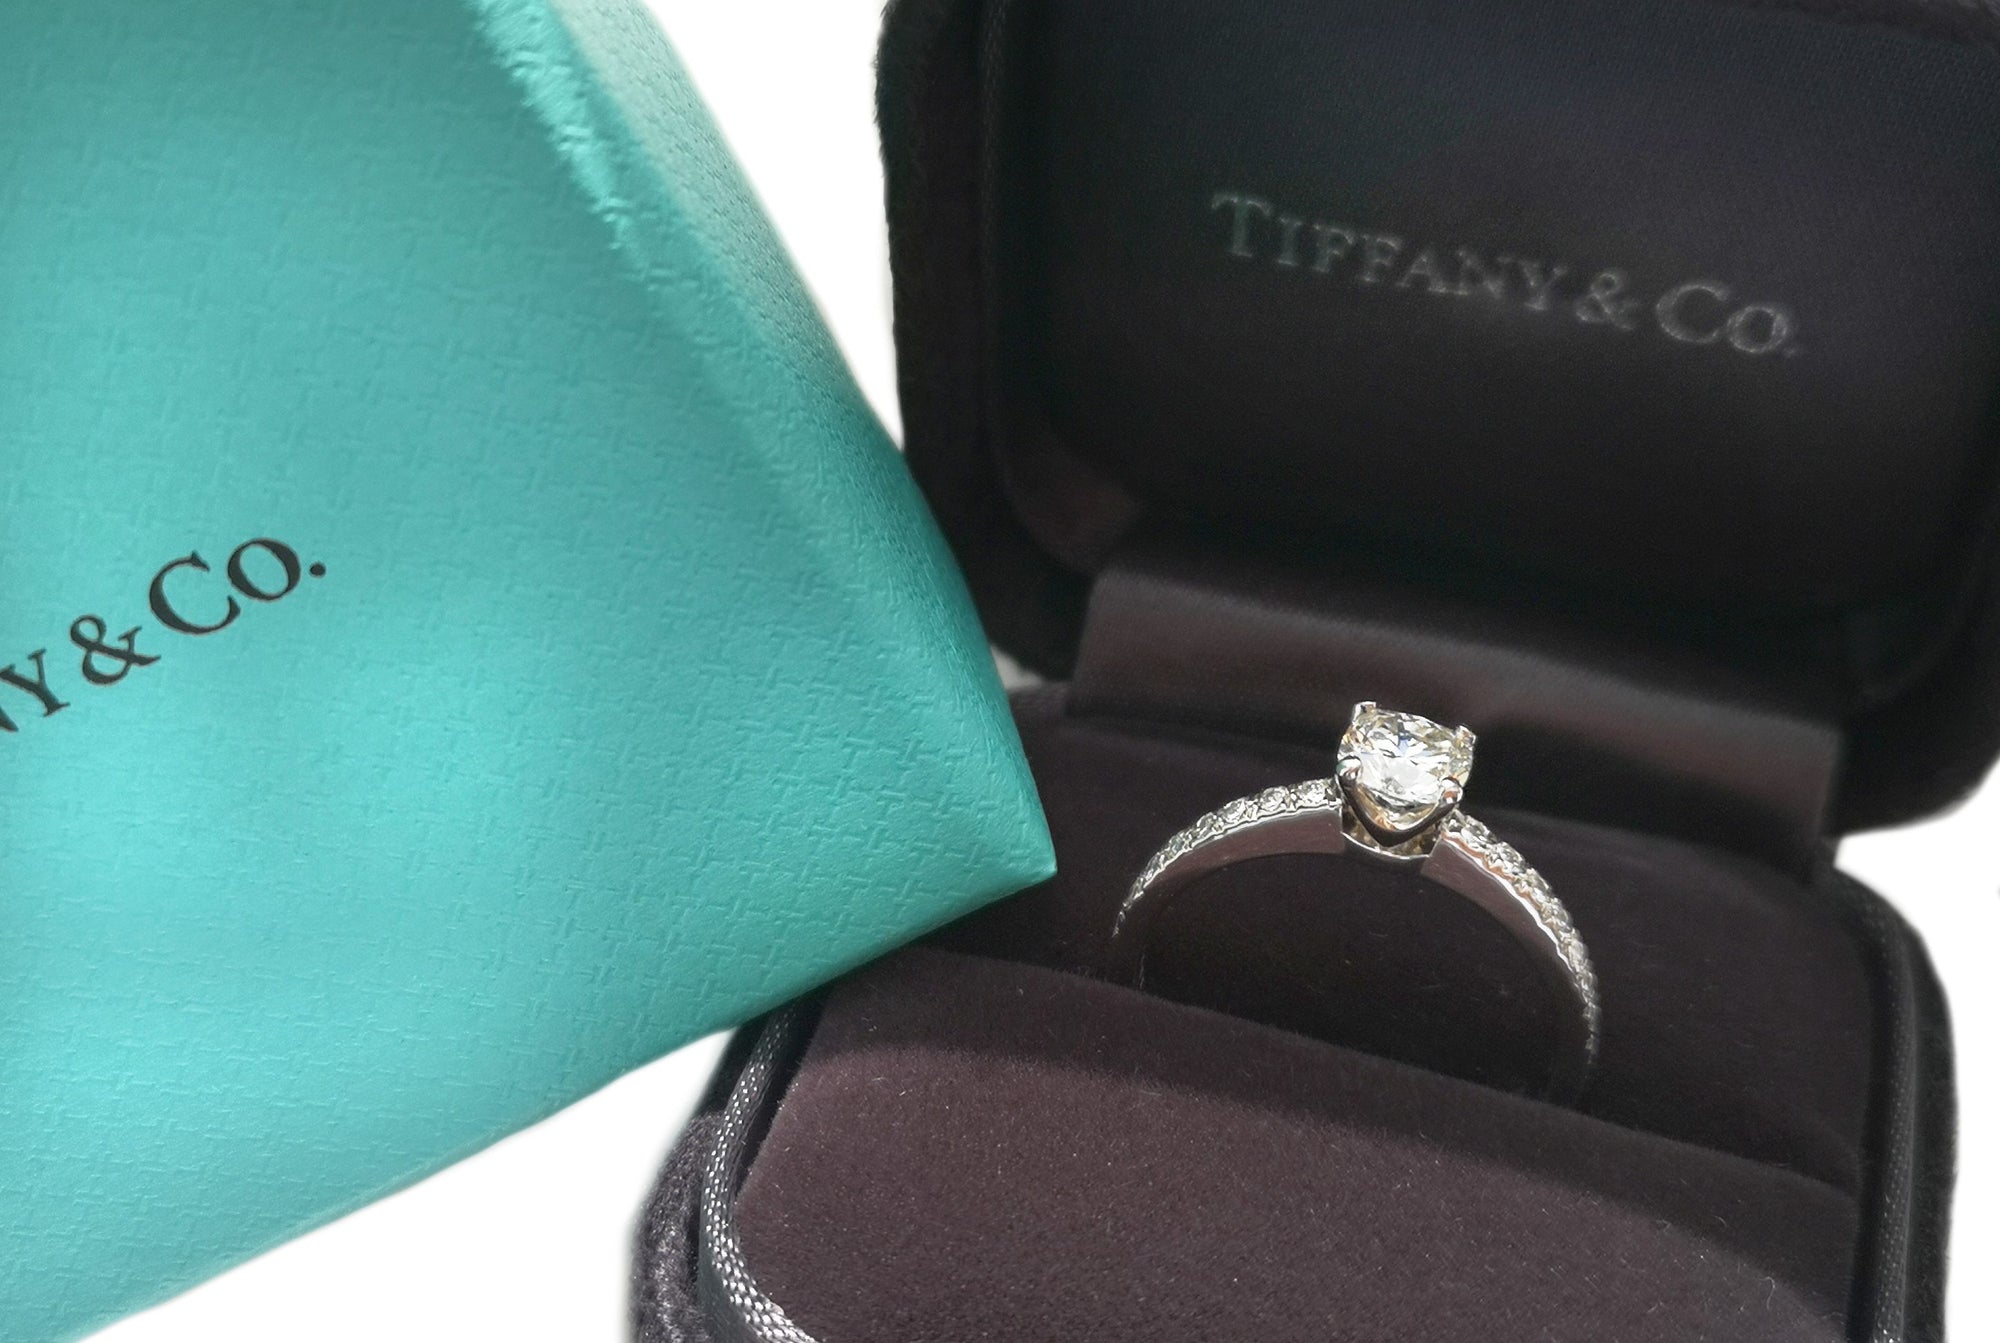 Tiffany & Co. 0.70tcw H/VVS1 Novo Diamond Engagement Ring